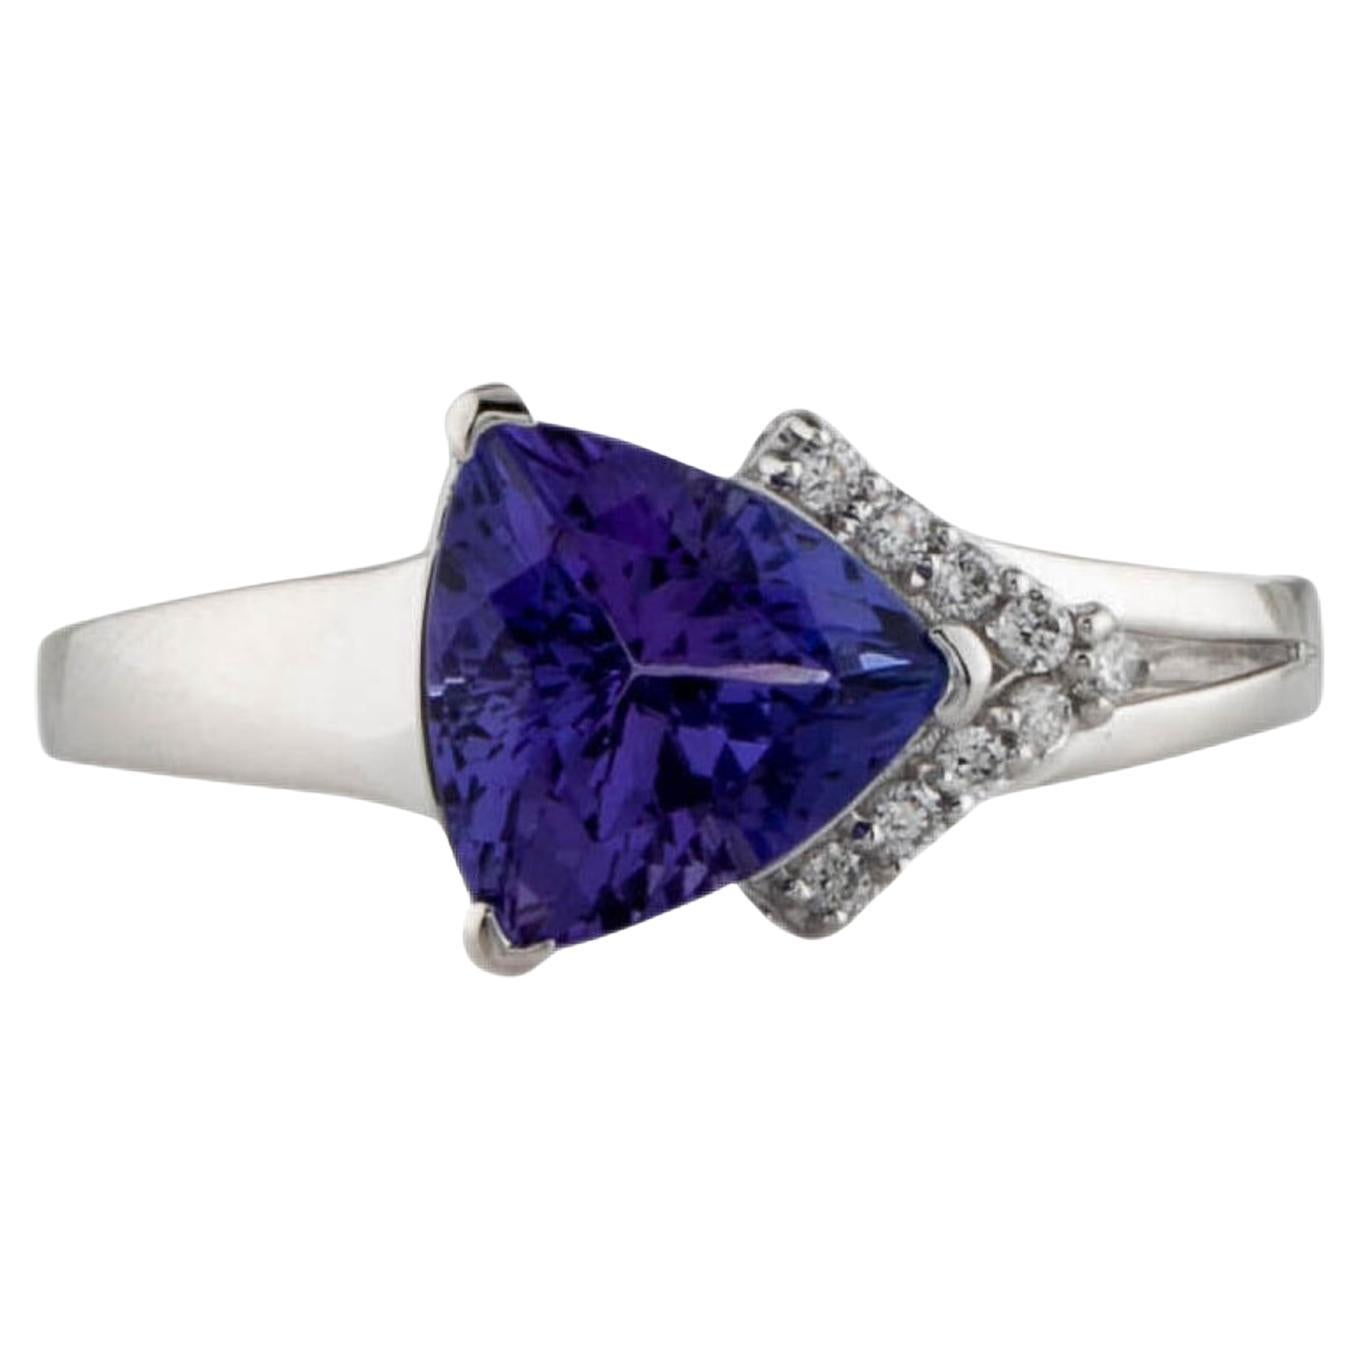 Luxurious 14K Tanzanite & Diamond Cocktail Ring, Size 7.25 - Statement Jewelry For Sale